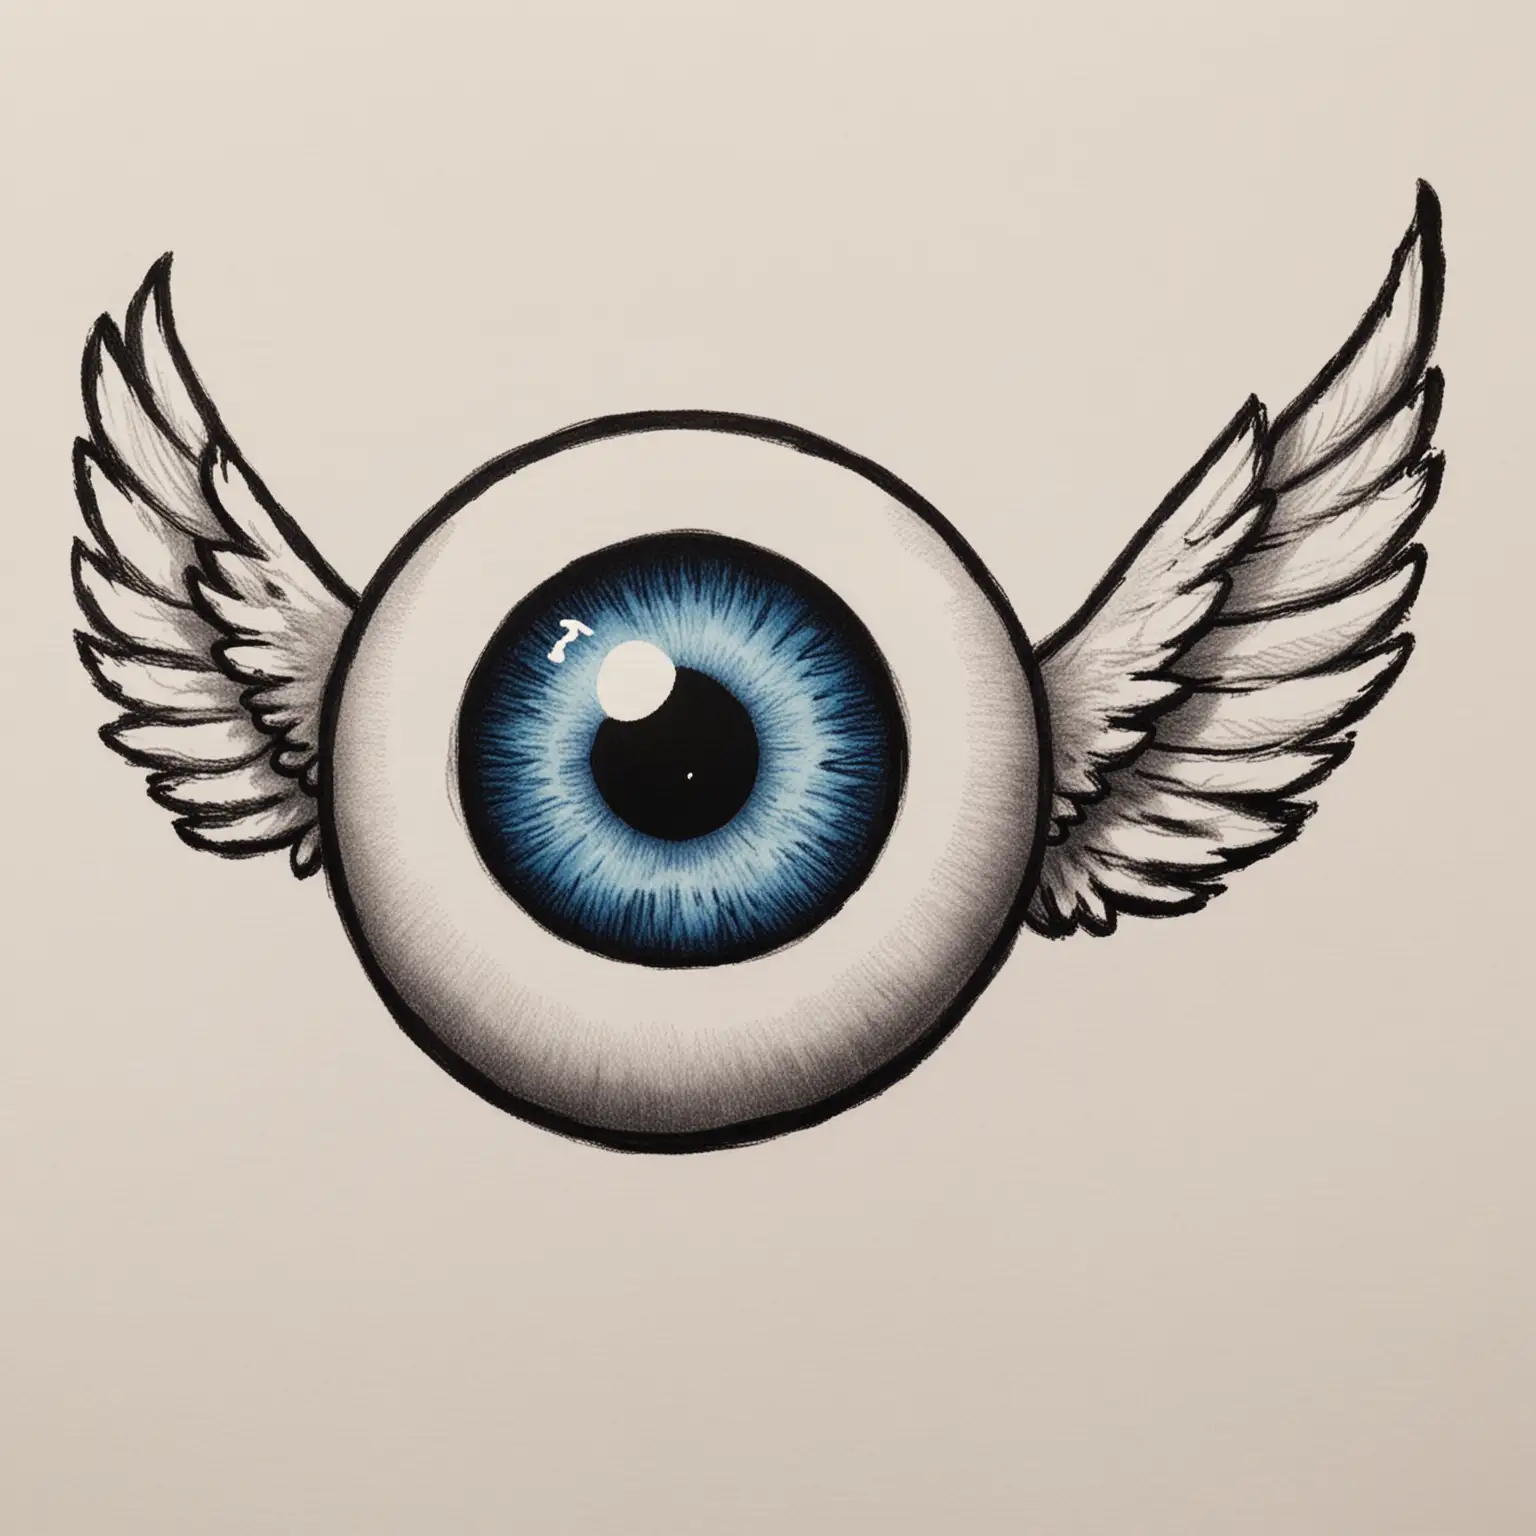 Ethereal Winged Eyeball Sketch